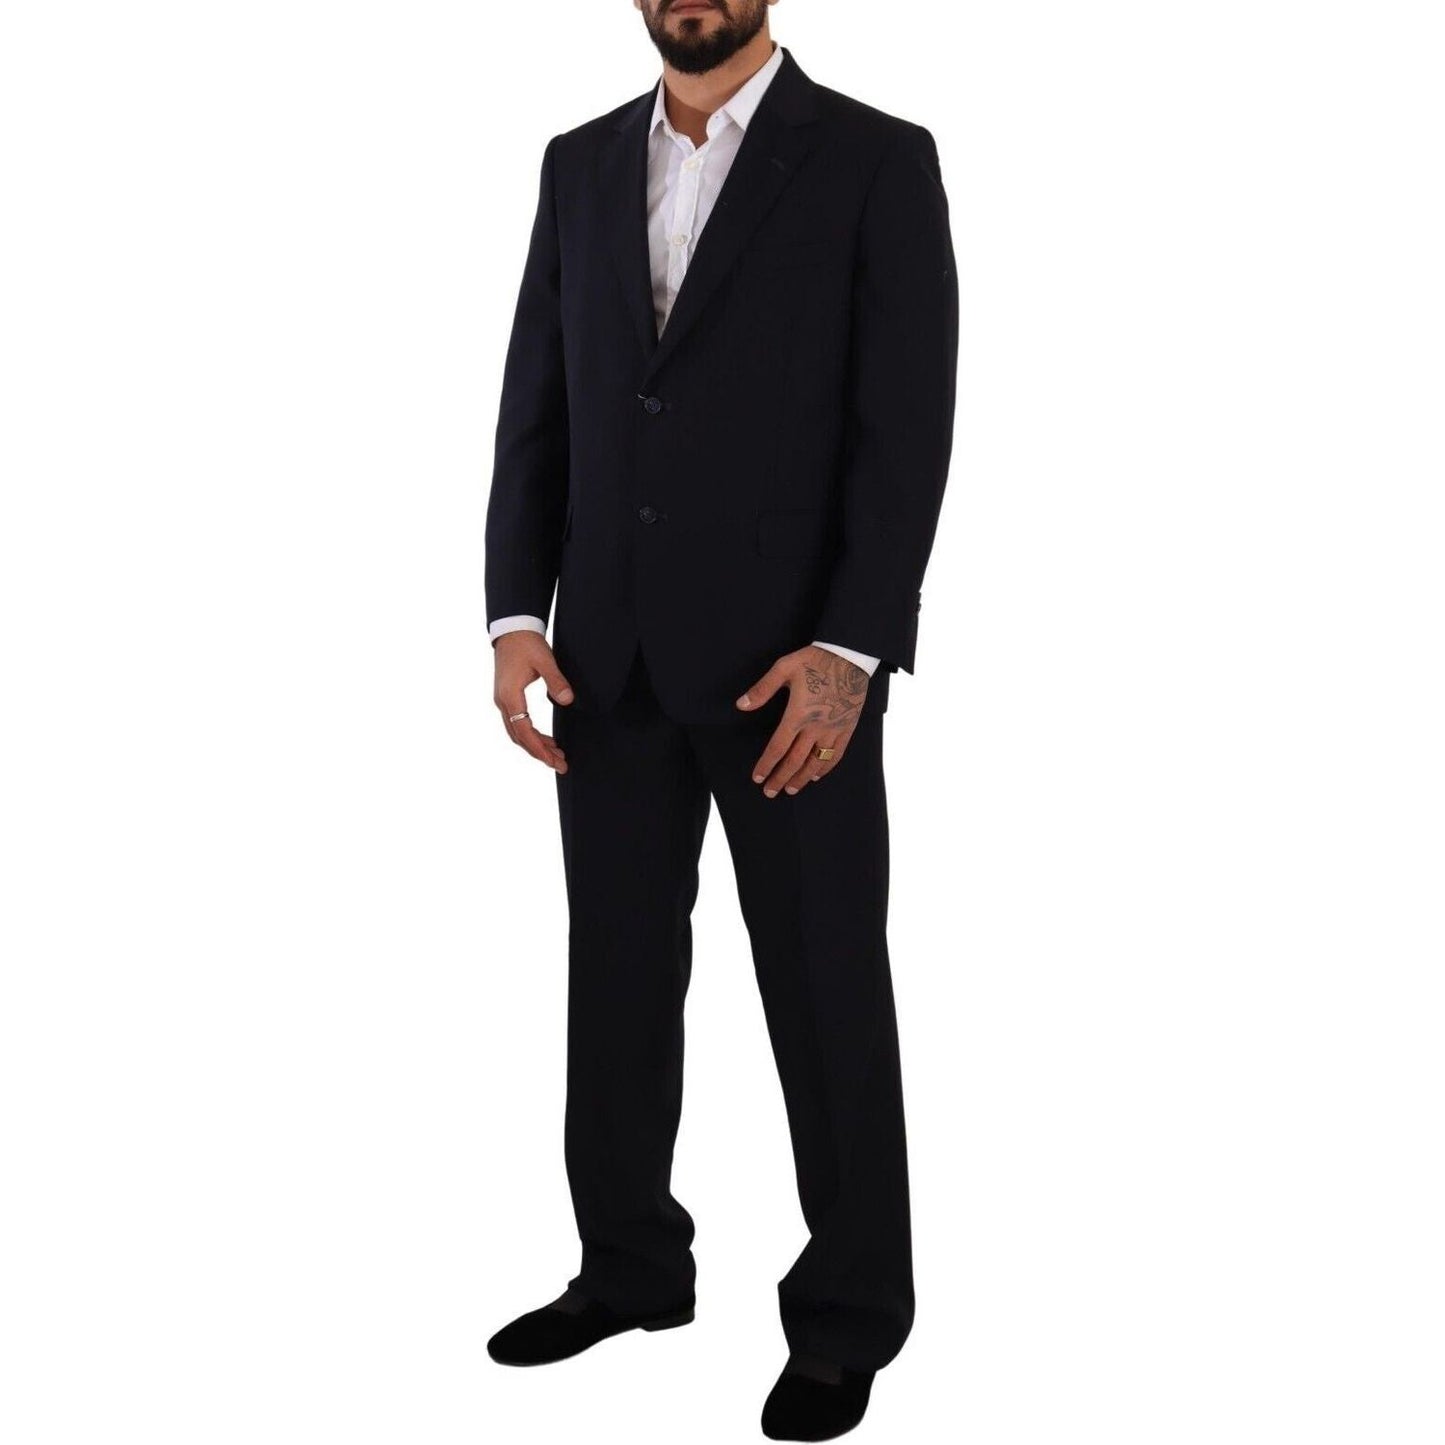 Domenico Tagliente Elegant Black Two-Piece Suit Ensemble blue-polyester-single-breasted-formal-suit-1 s-l1600-20-5-92337ca8-200.jpg